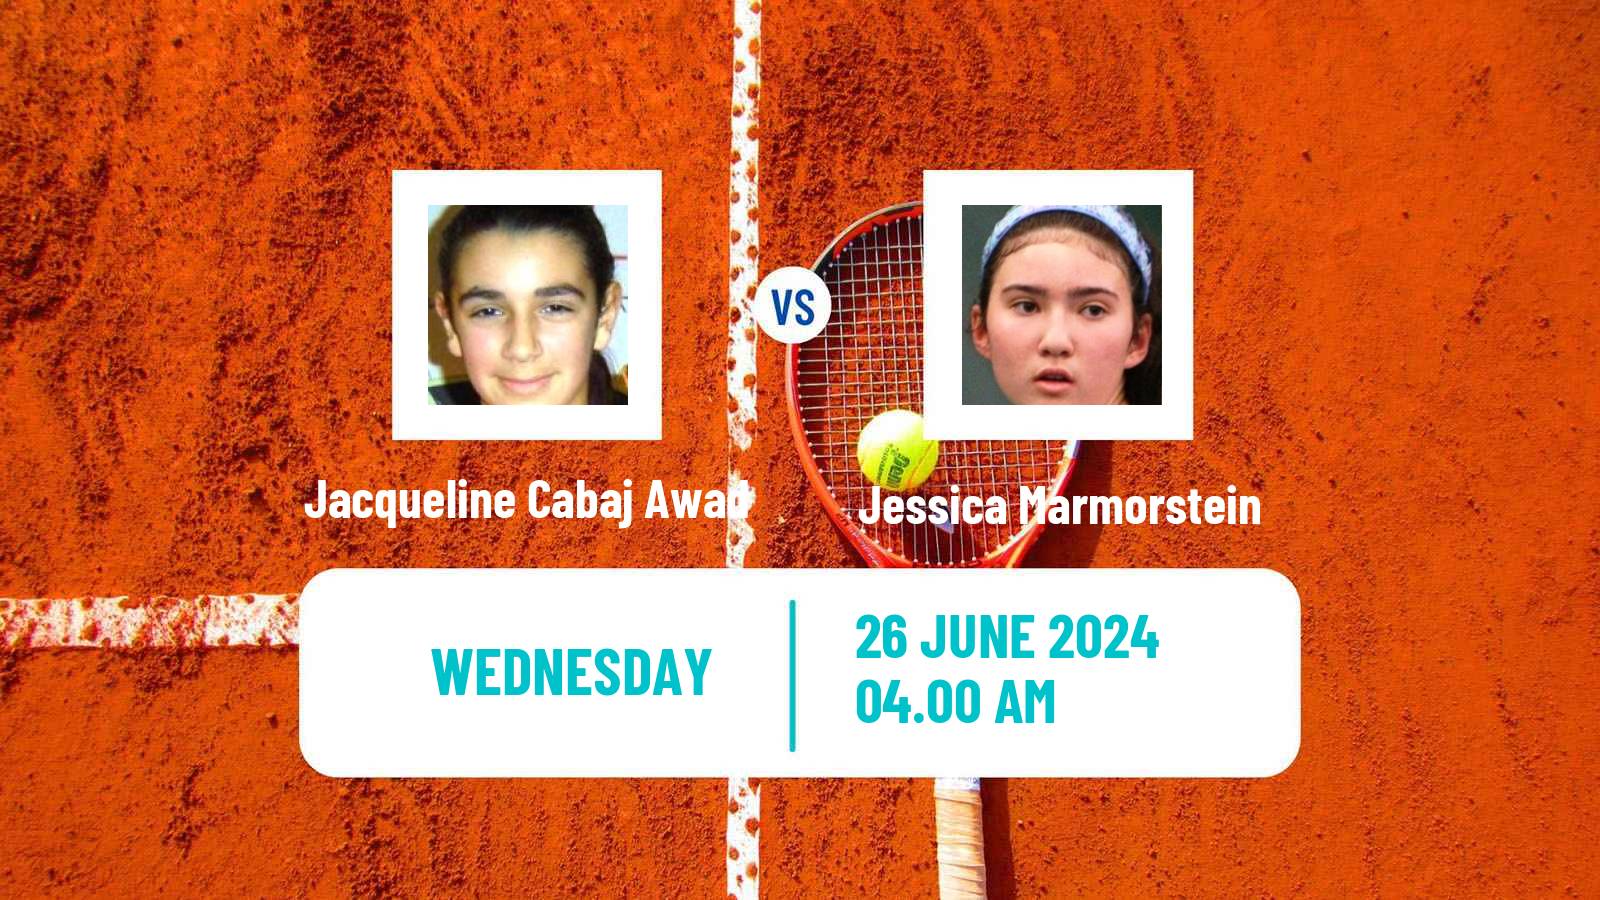 Tennis ITF W15 Hillcrest 2 Women Jacqueline Cabaj Awad - Jessica Marmorstein